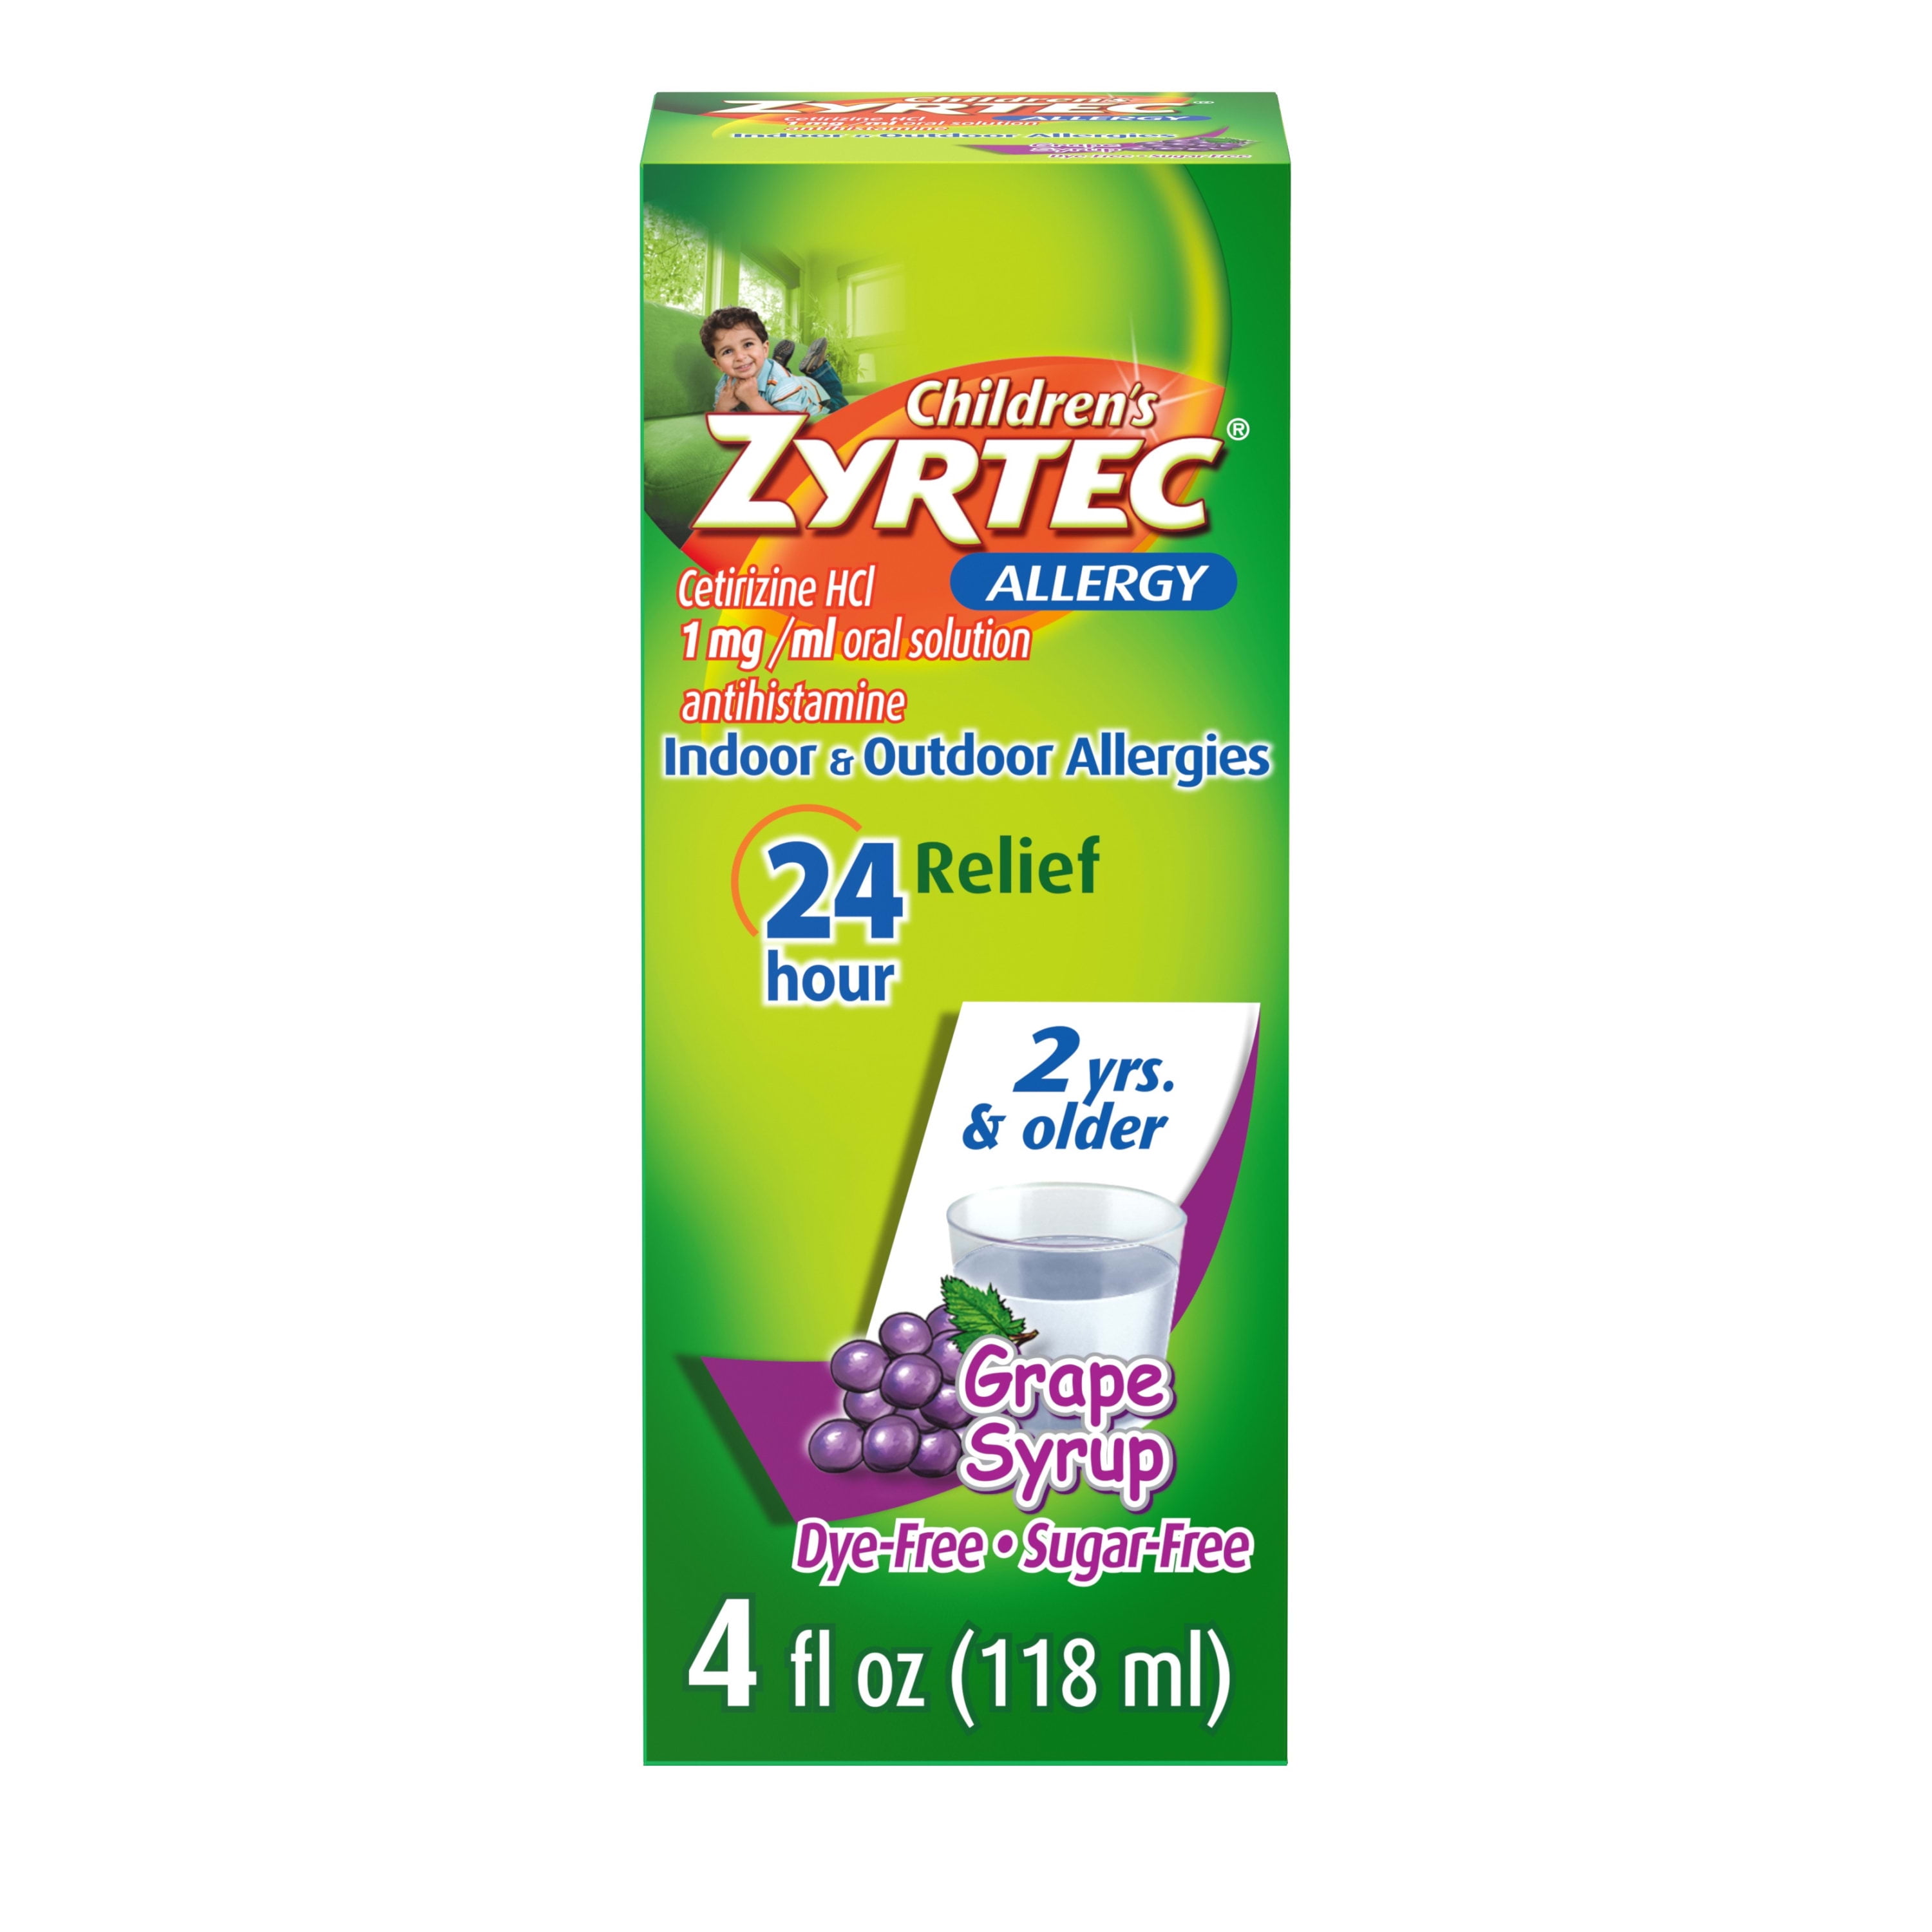 Zyrtec 24 Hour Children's Allergy Relief Syrup, Grape Flavor, 4 fl. oz